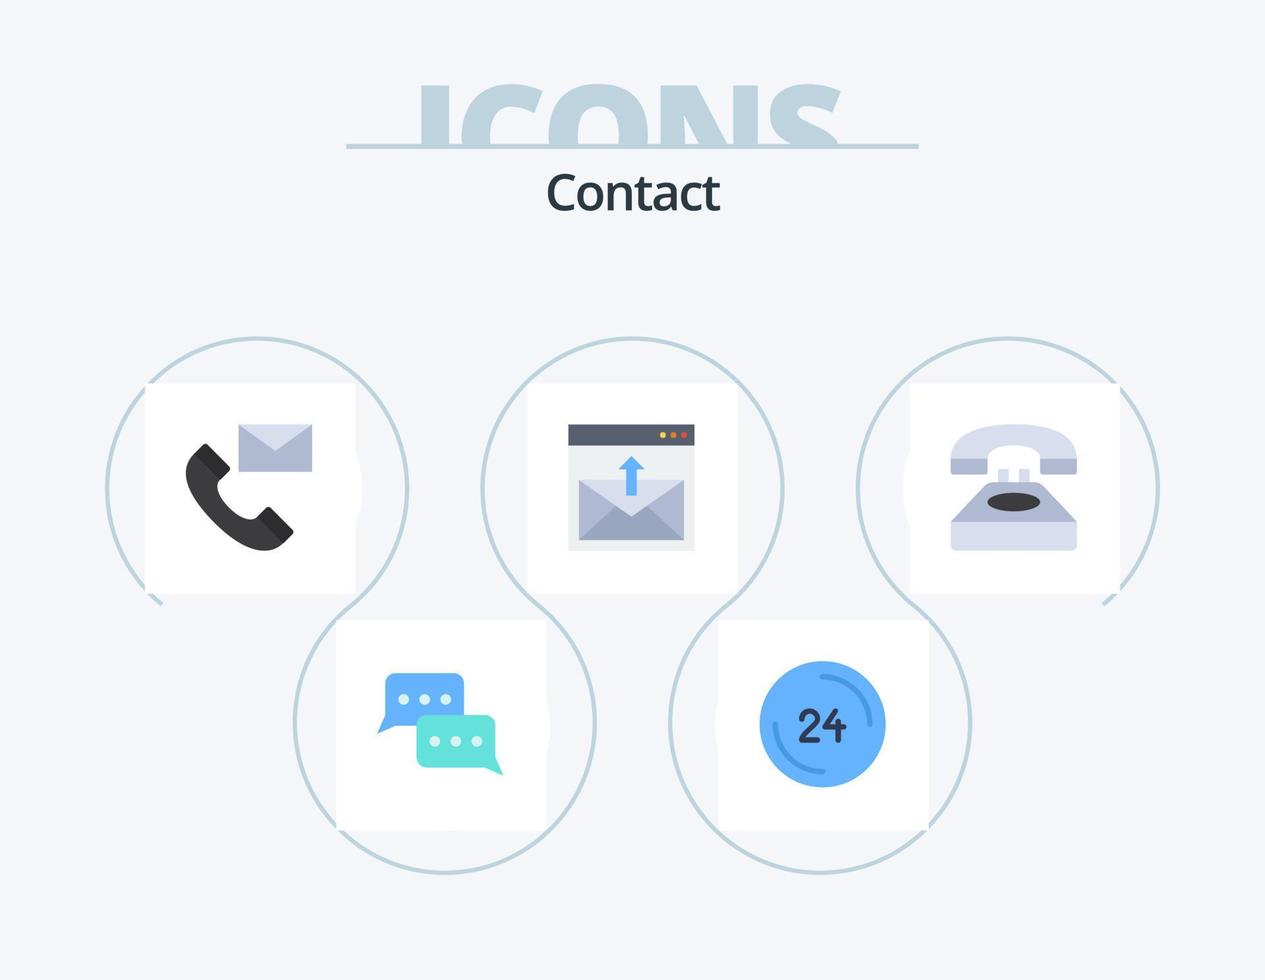 Kontakt Flat Icon Pack 5 Icon Design. kontaktiere uns. Kommunikation. Kontakt. die Info. kontaktiere uns vektor